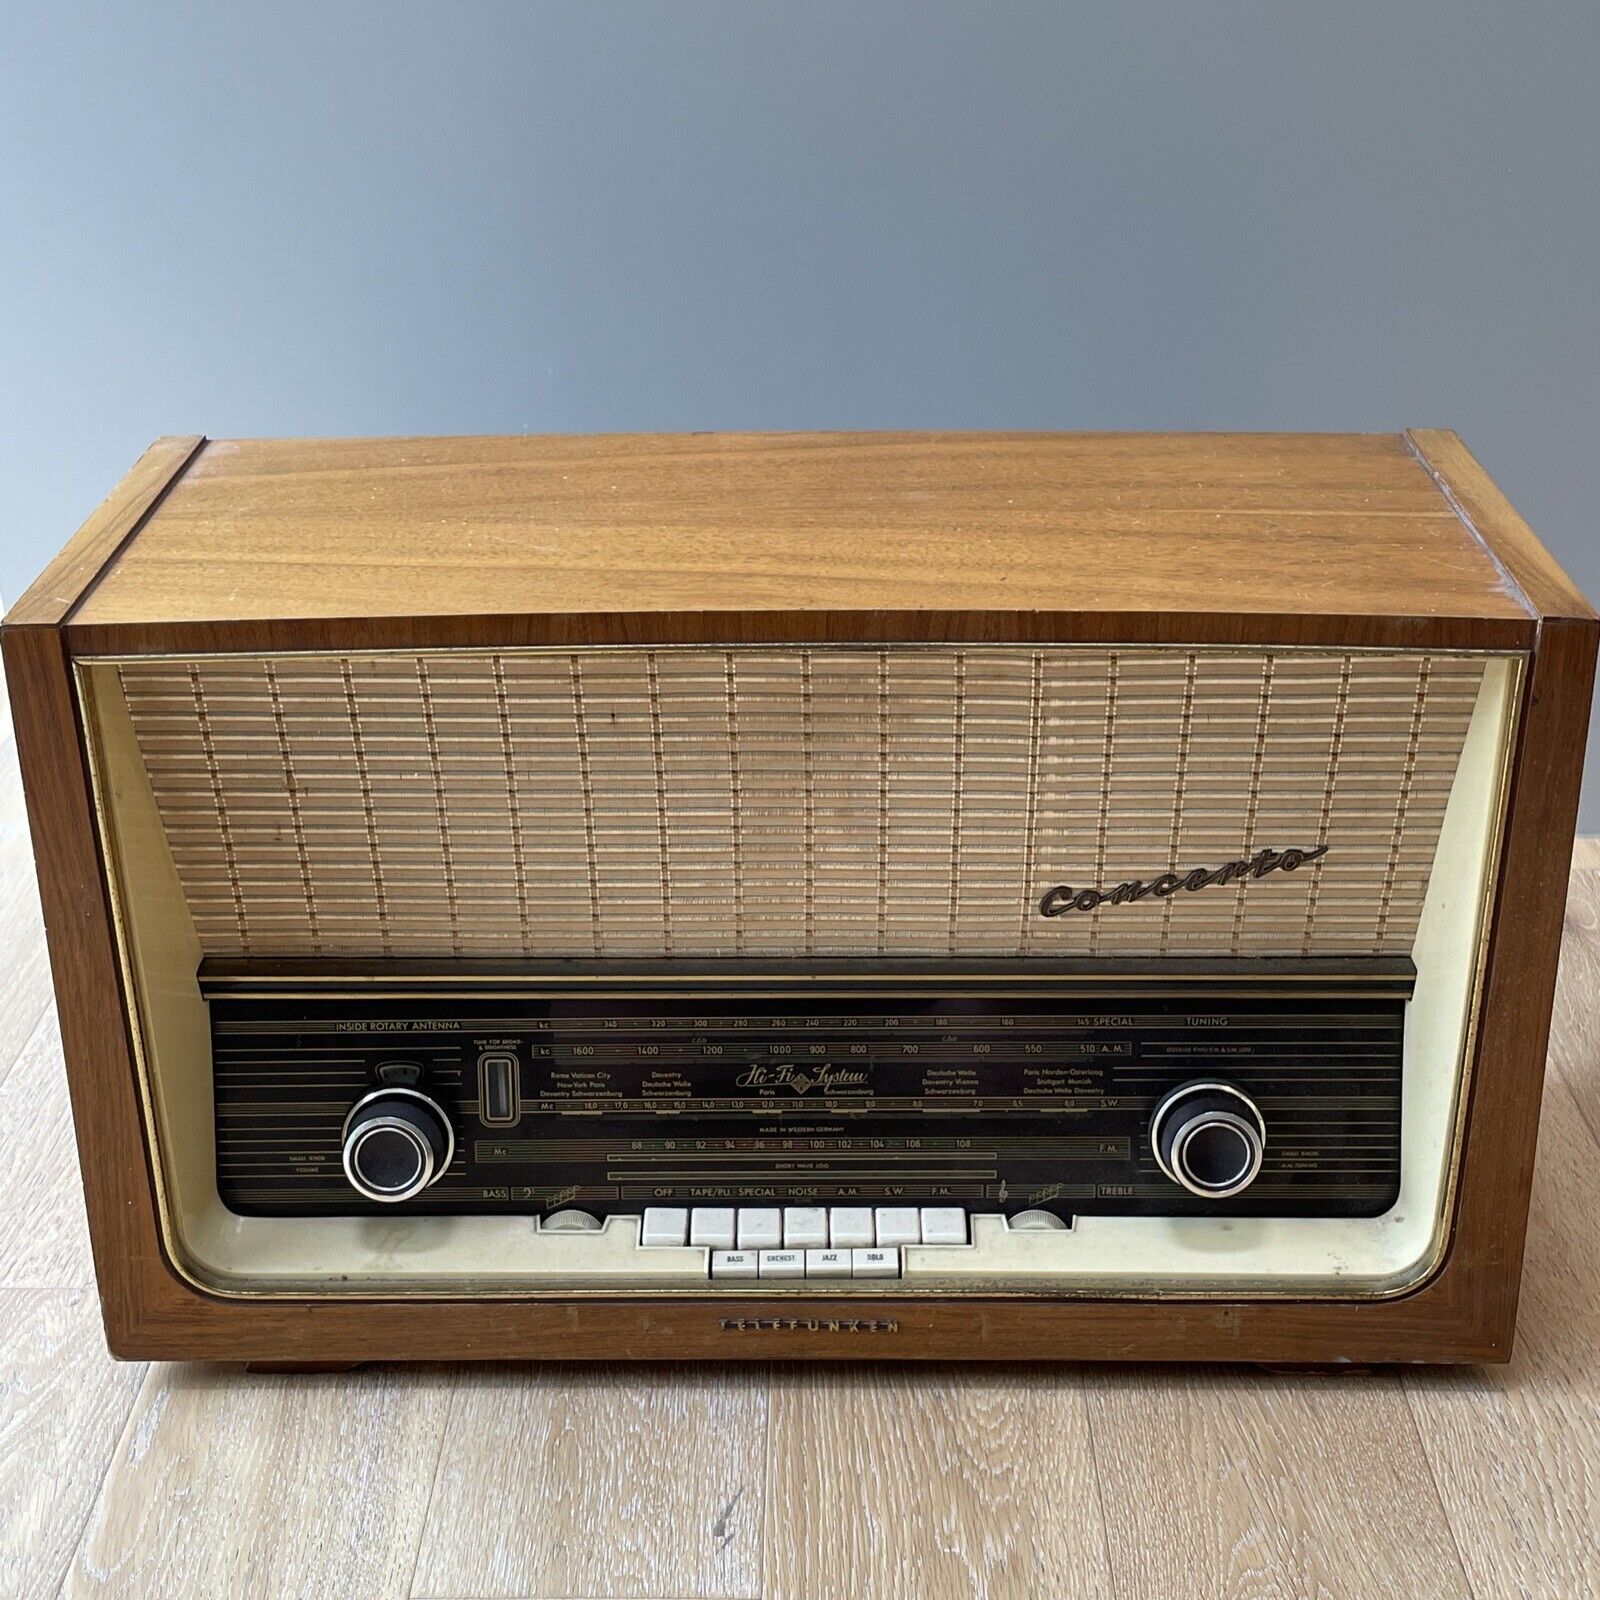 Vintage 1959 Telefunken Concerto 9U High Fidelity Radio Made In West Germany